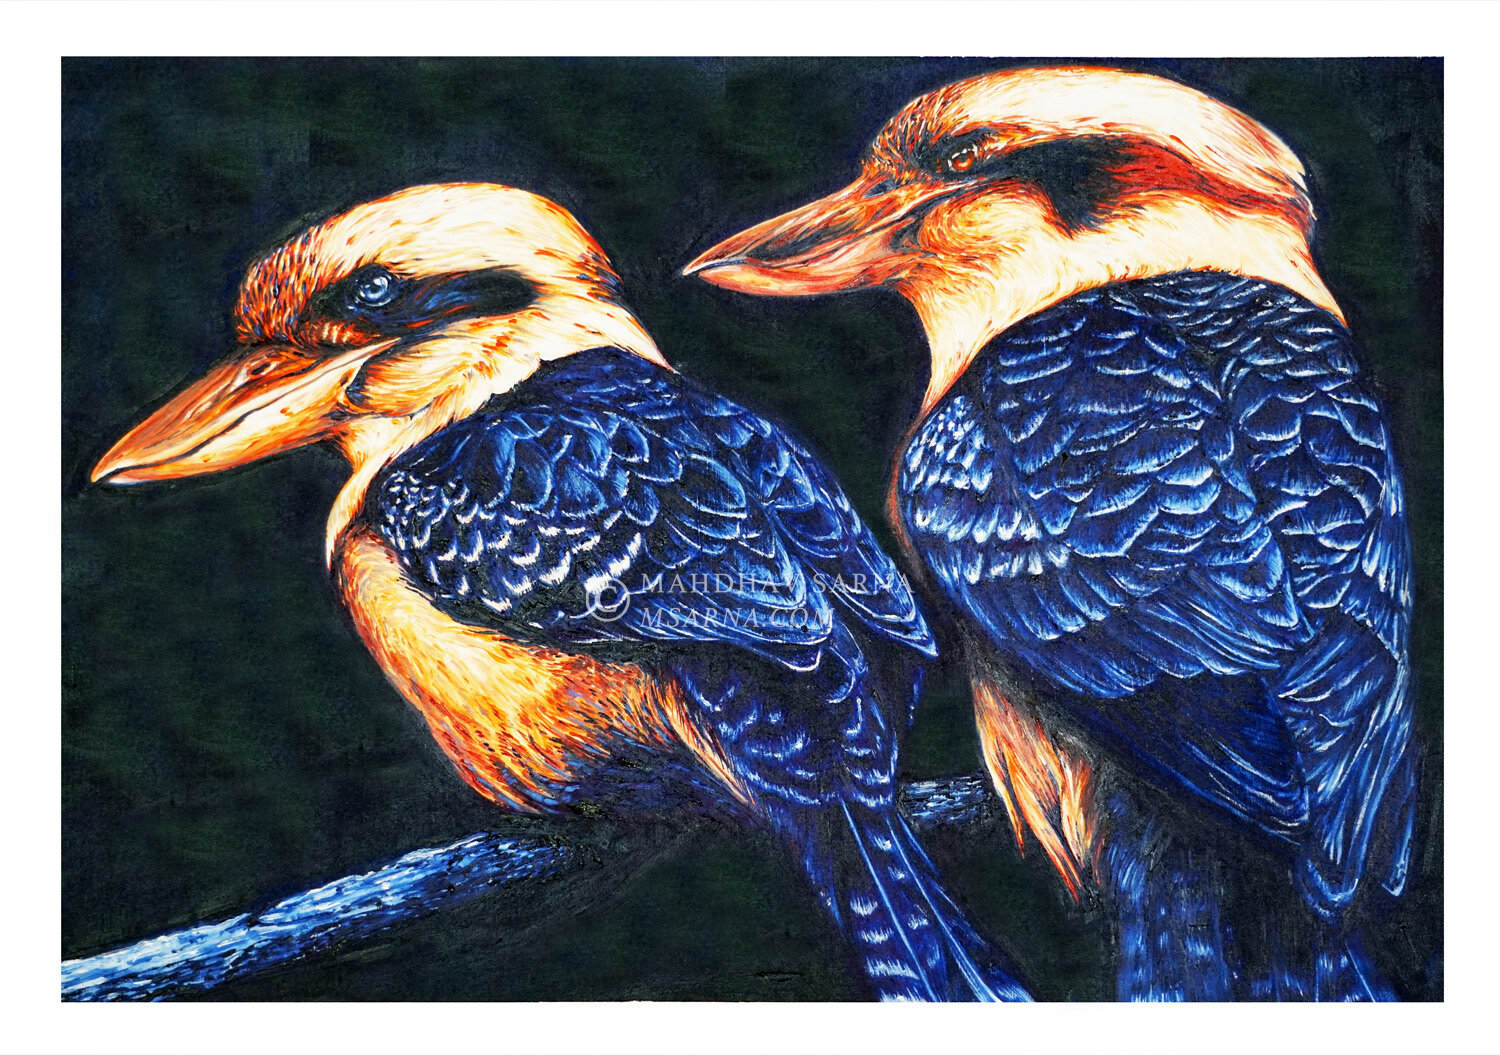 laughing kookaburra oil painting tsis wildlife art mahdhav sarna 01.jpg